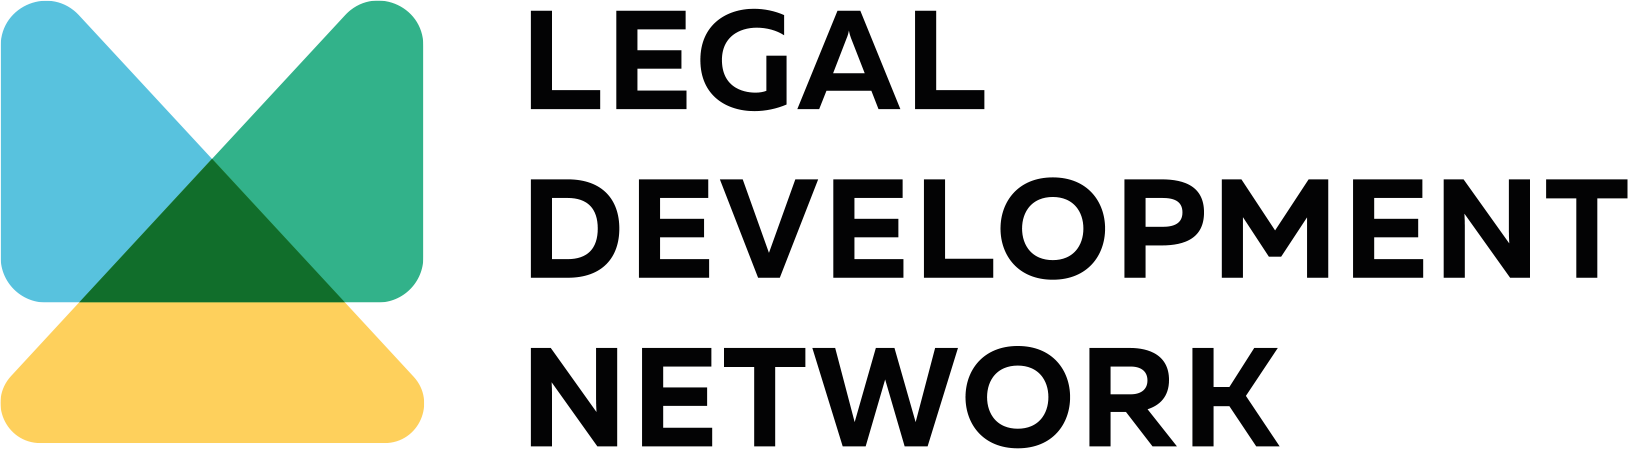 Legal Development Network